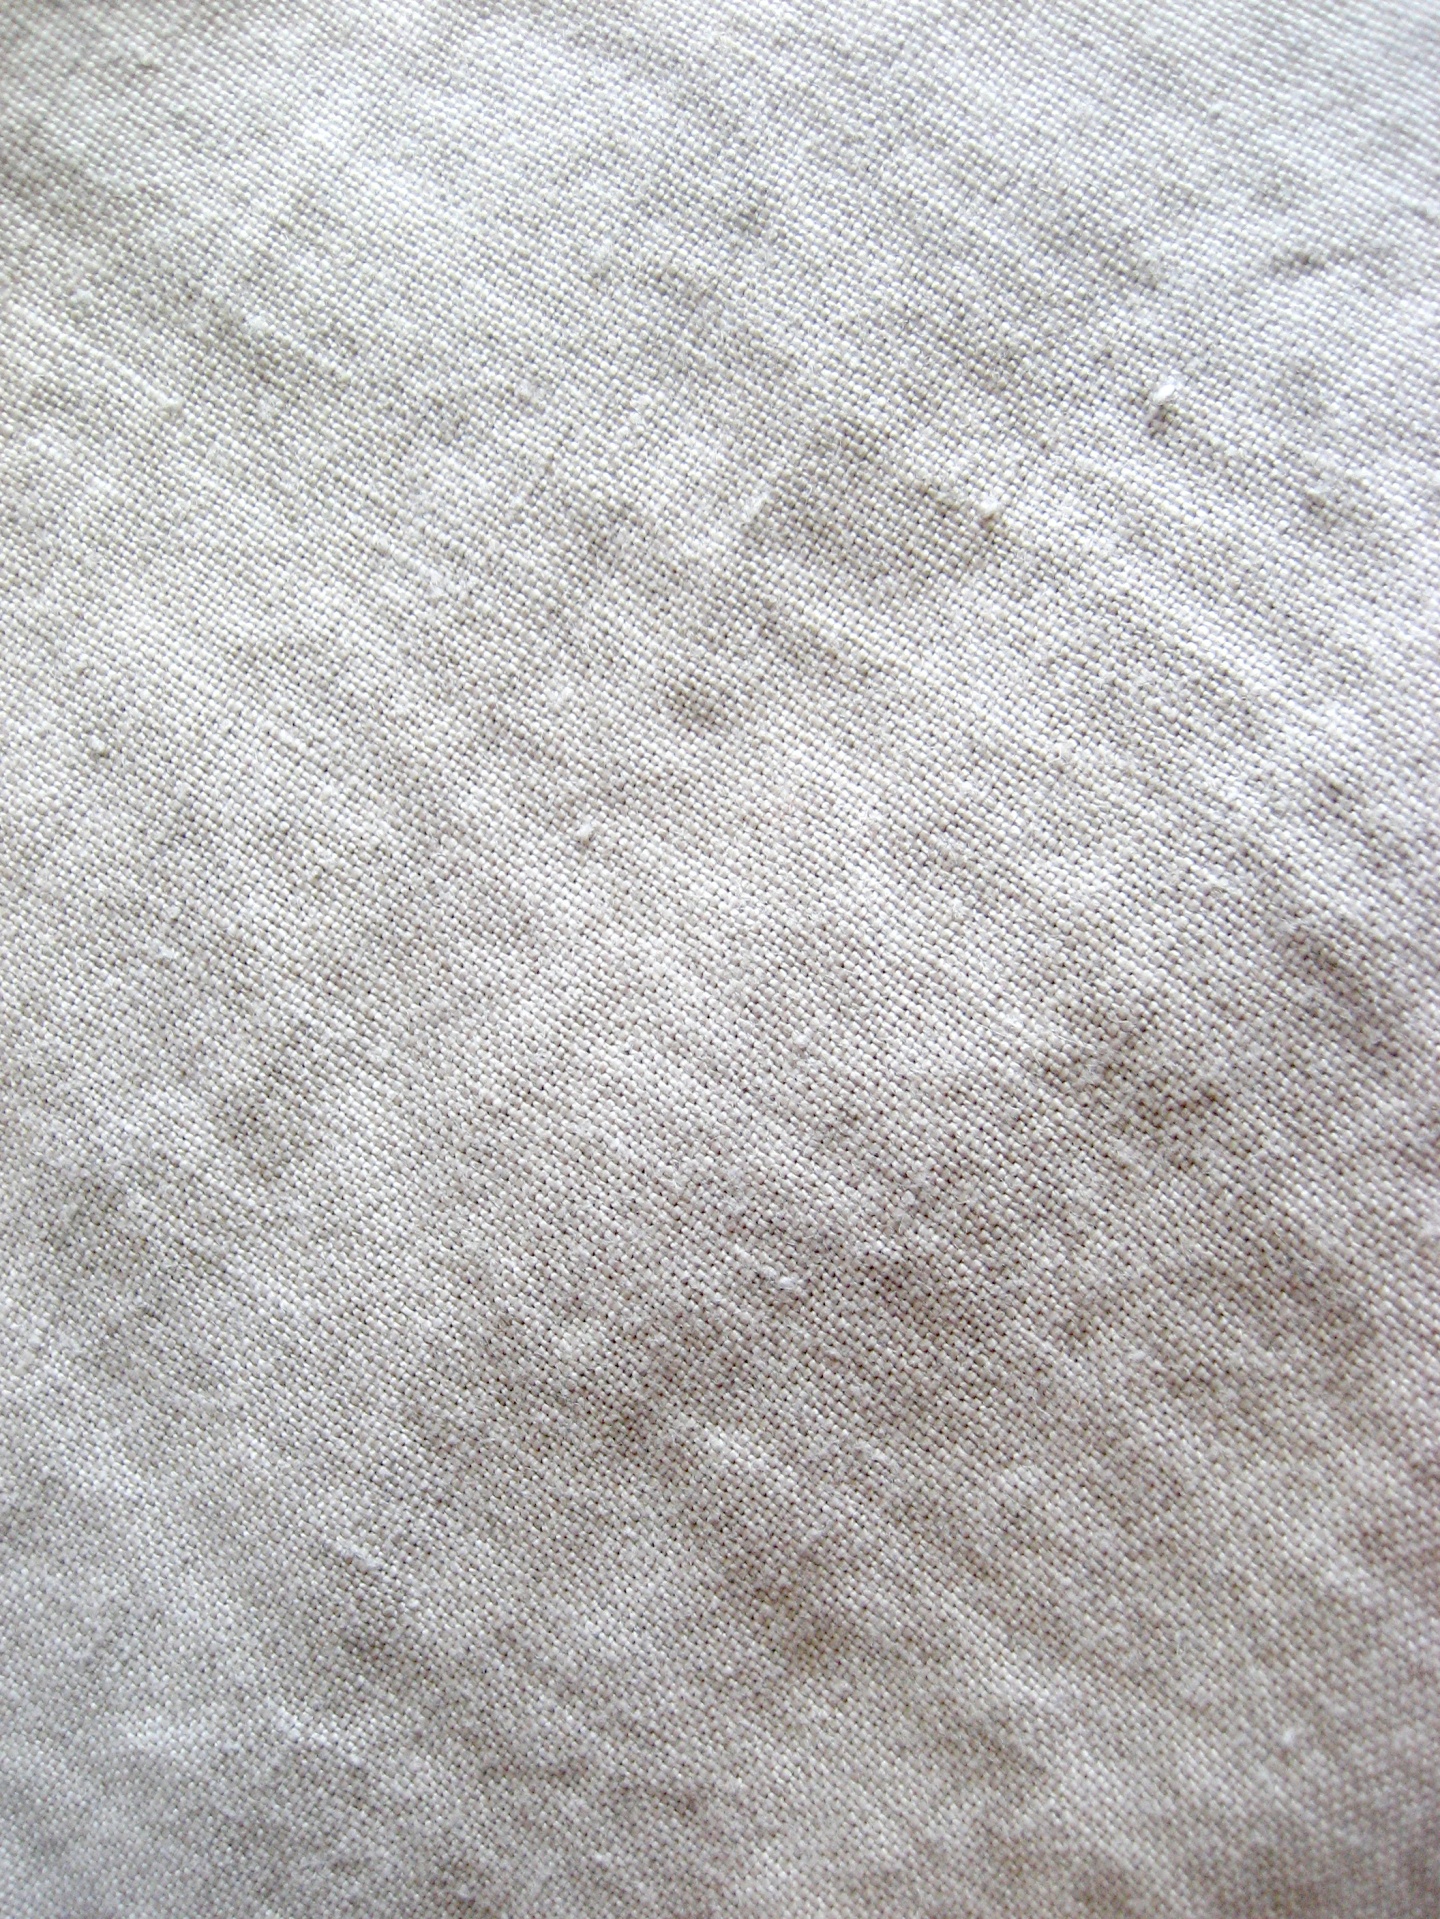 linen flax fabric free photo